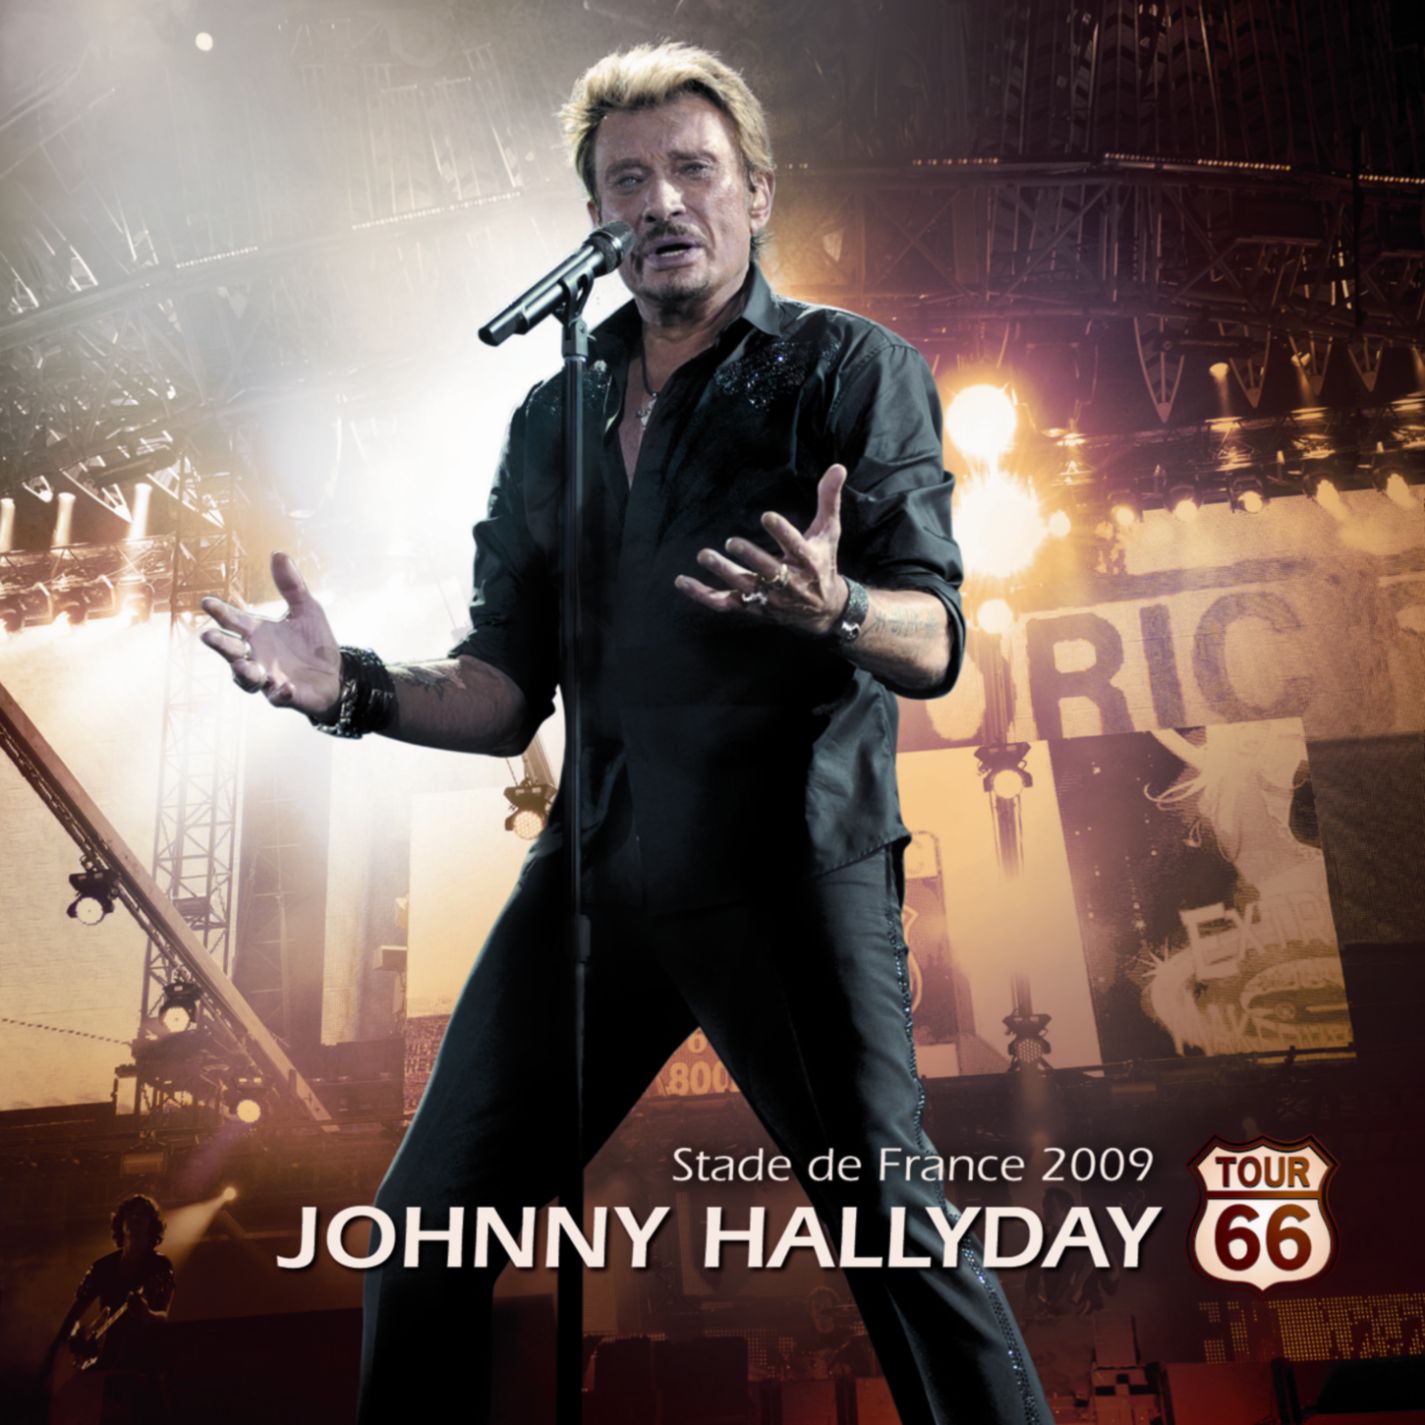 Джонни тур. Джонни Холлидей. Johnny Hallyday Tour 66. Джонни Холлидей farkagol. Джонни фото с концерта.